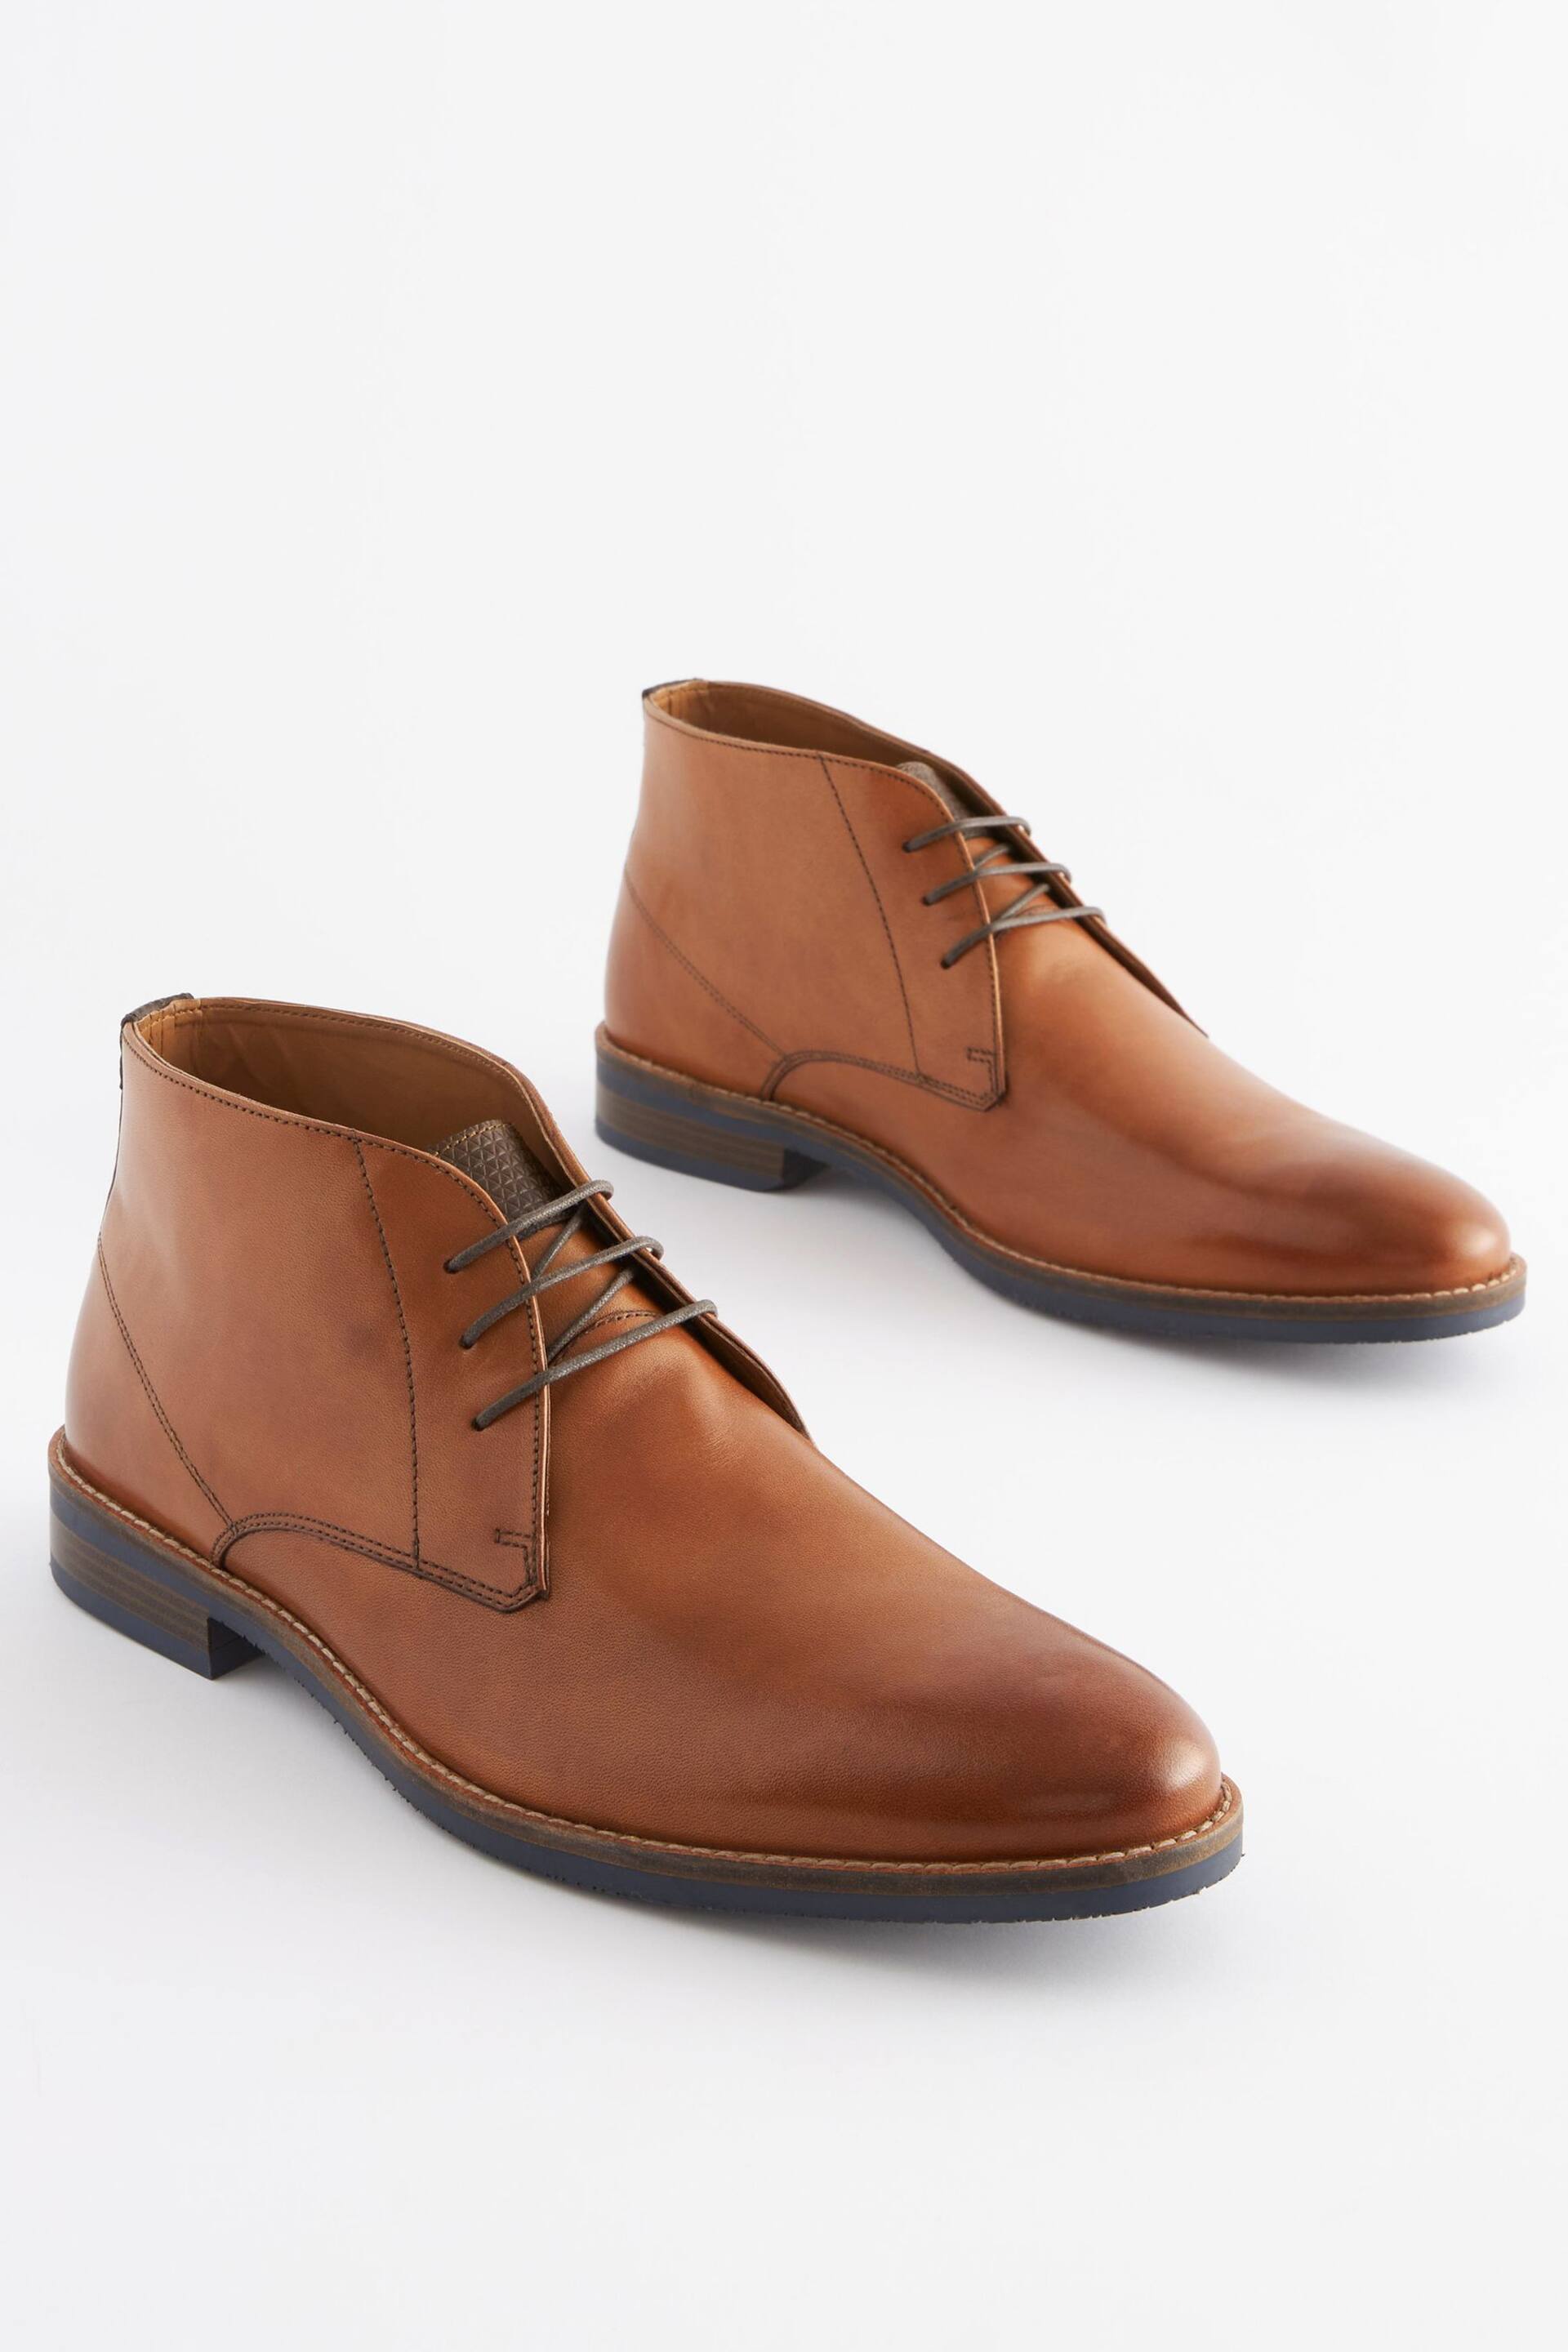 Tan Brown Leather Chukka Boots - Image 2 of 7